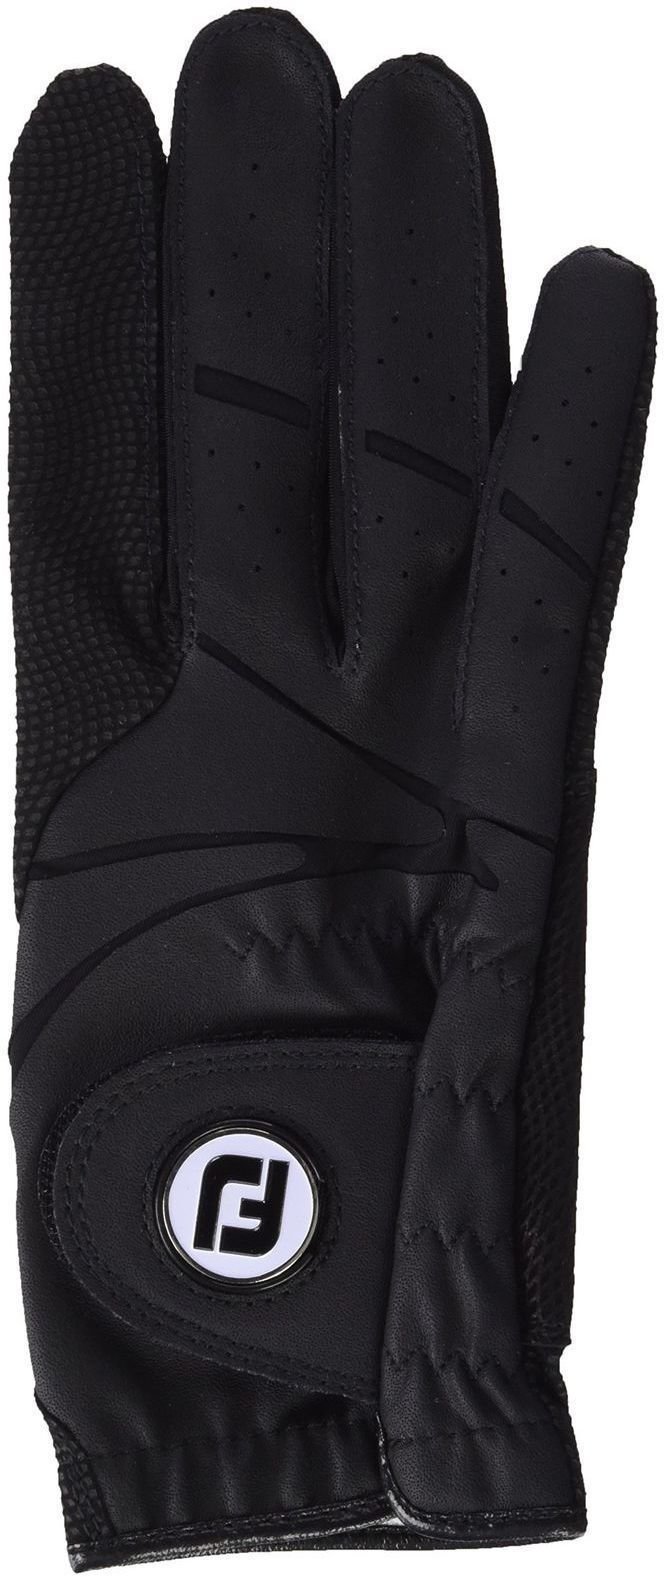 Gloves Footjoy Gtxtreme Mens Golf Glove Black Right Hand for Left Handed Golfers ML